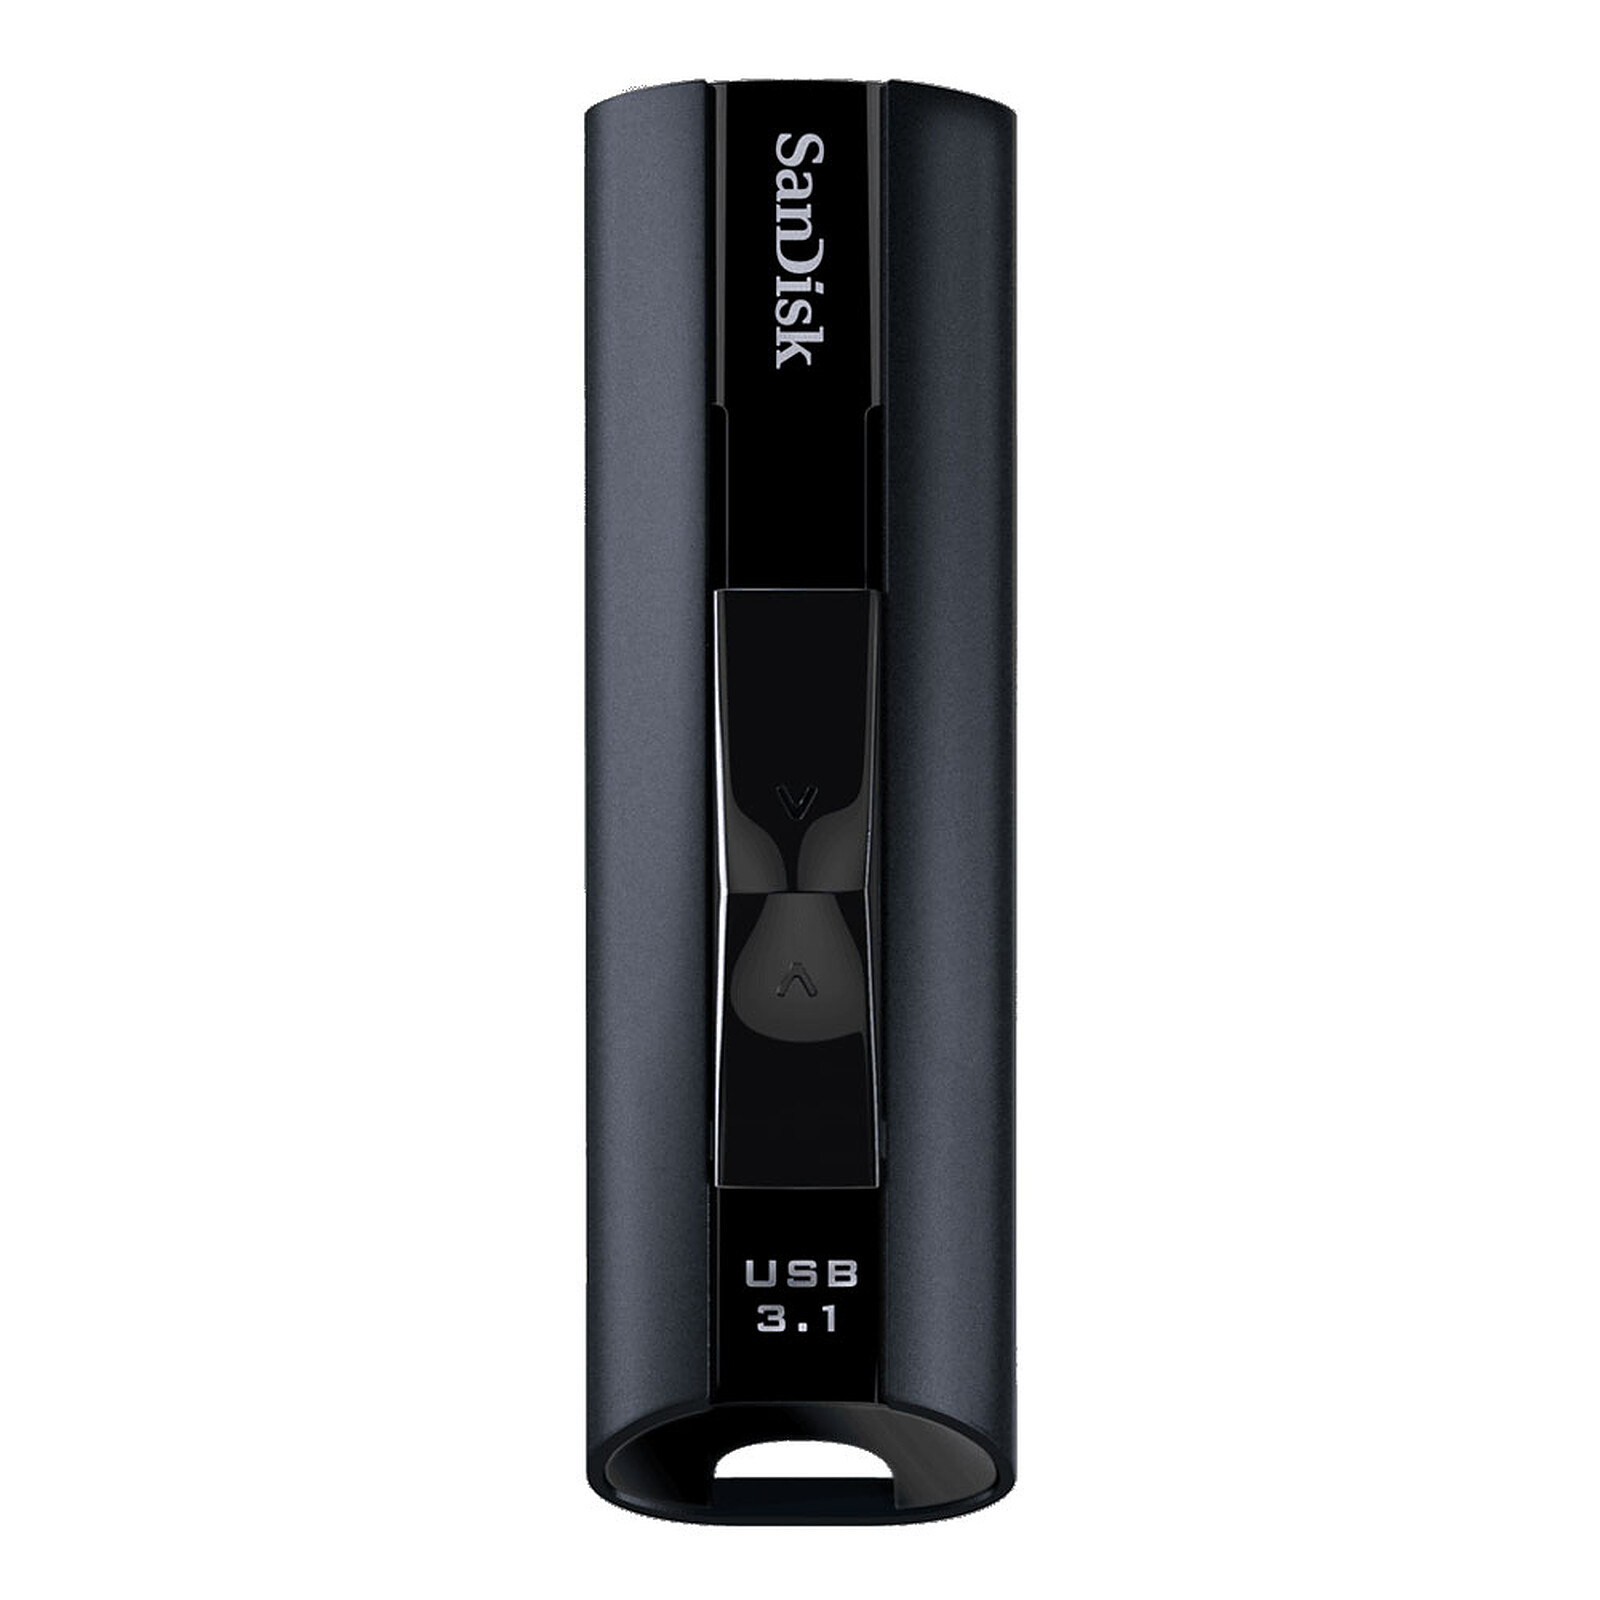 Clé USB SanDisk Extreme PRO 1 To 3.2 SSD 420 Mo/s - Clé USB